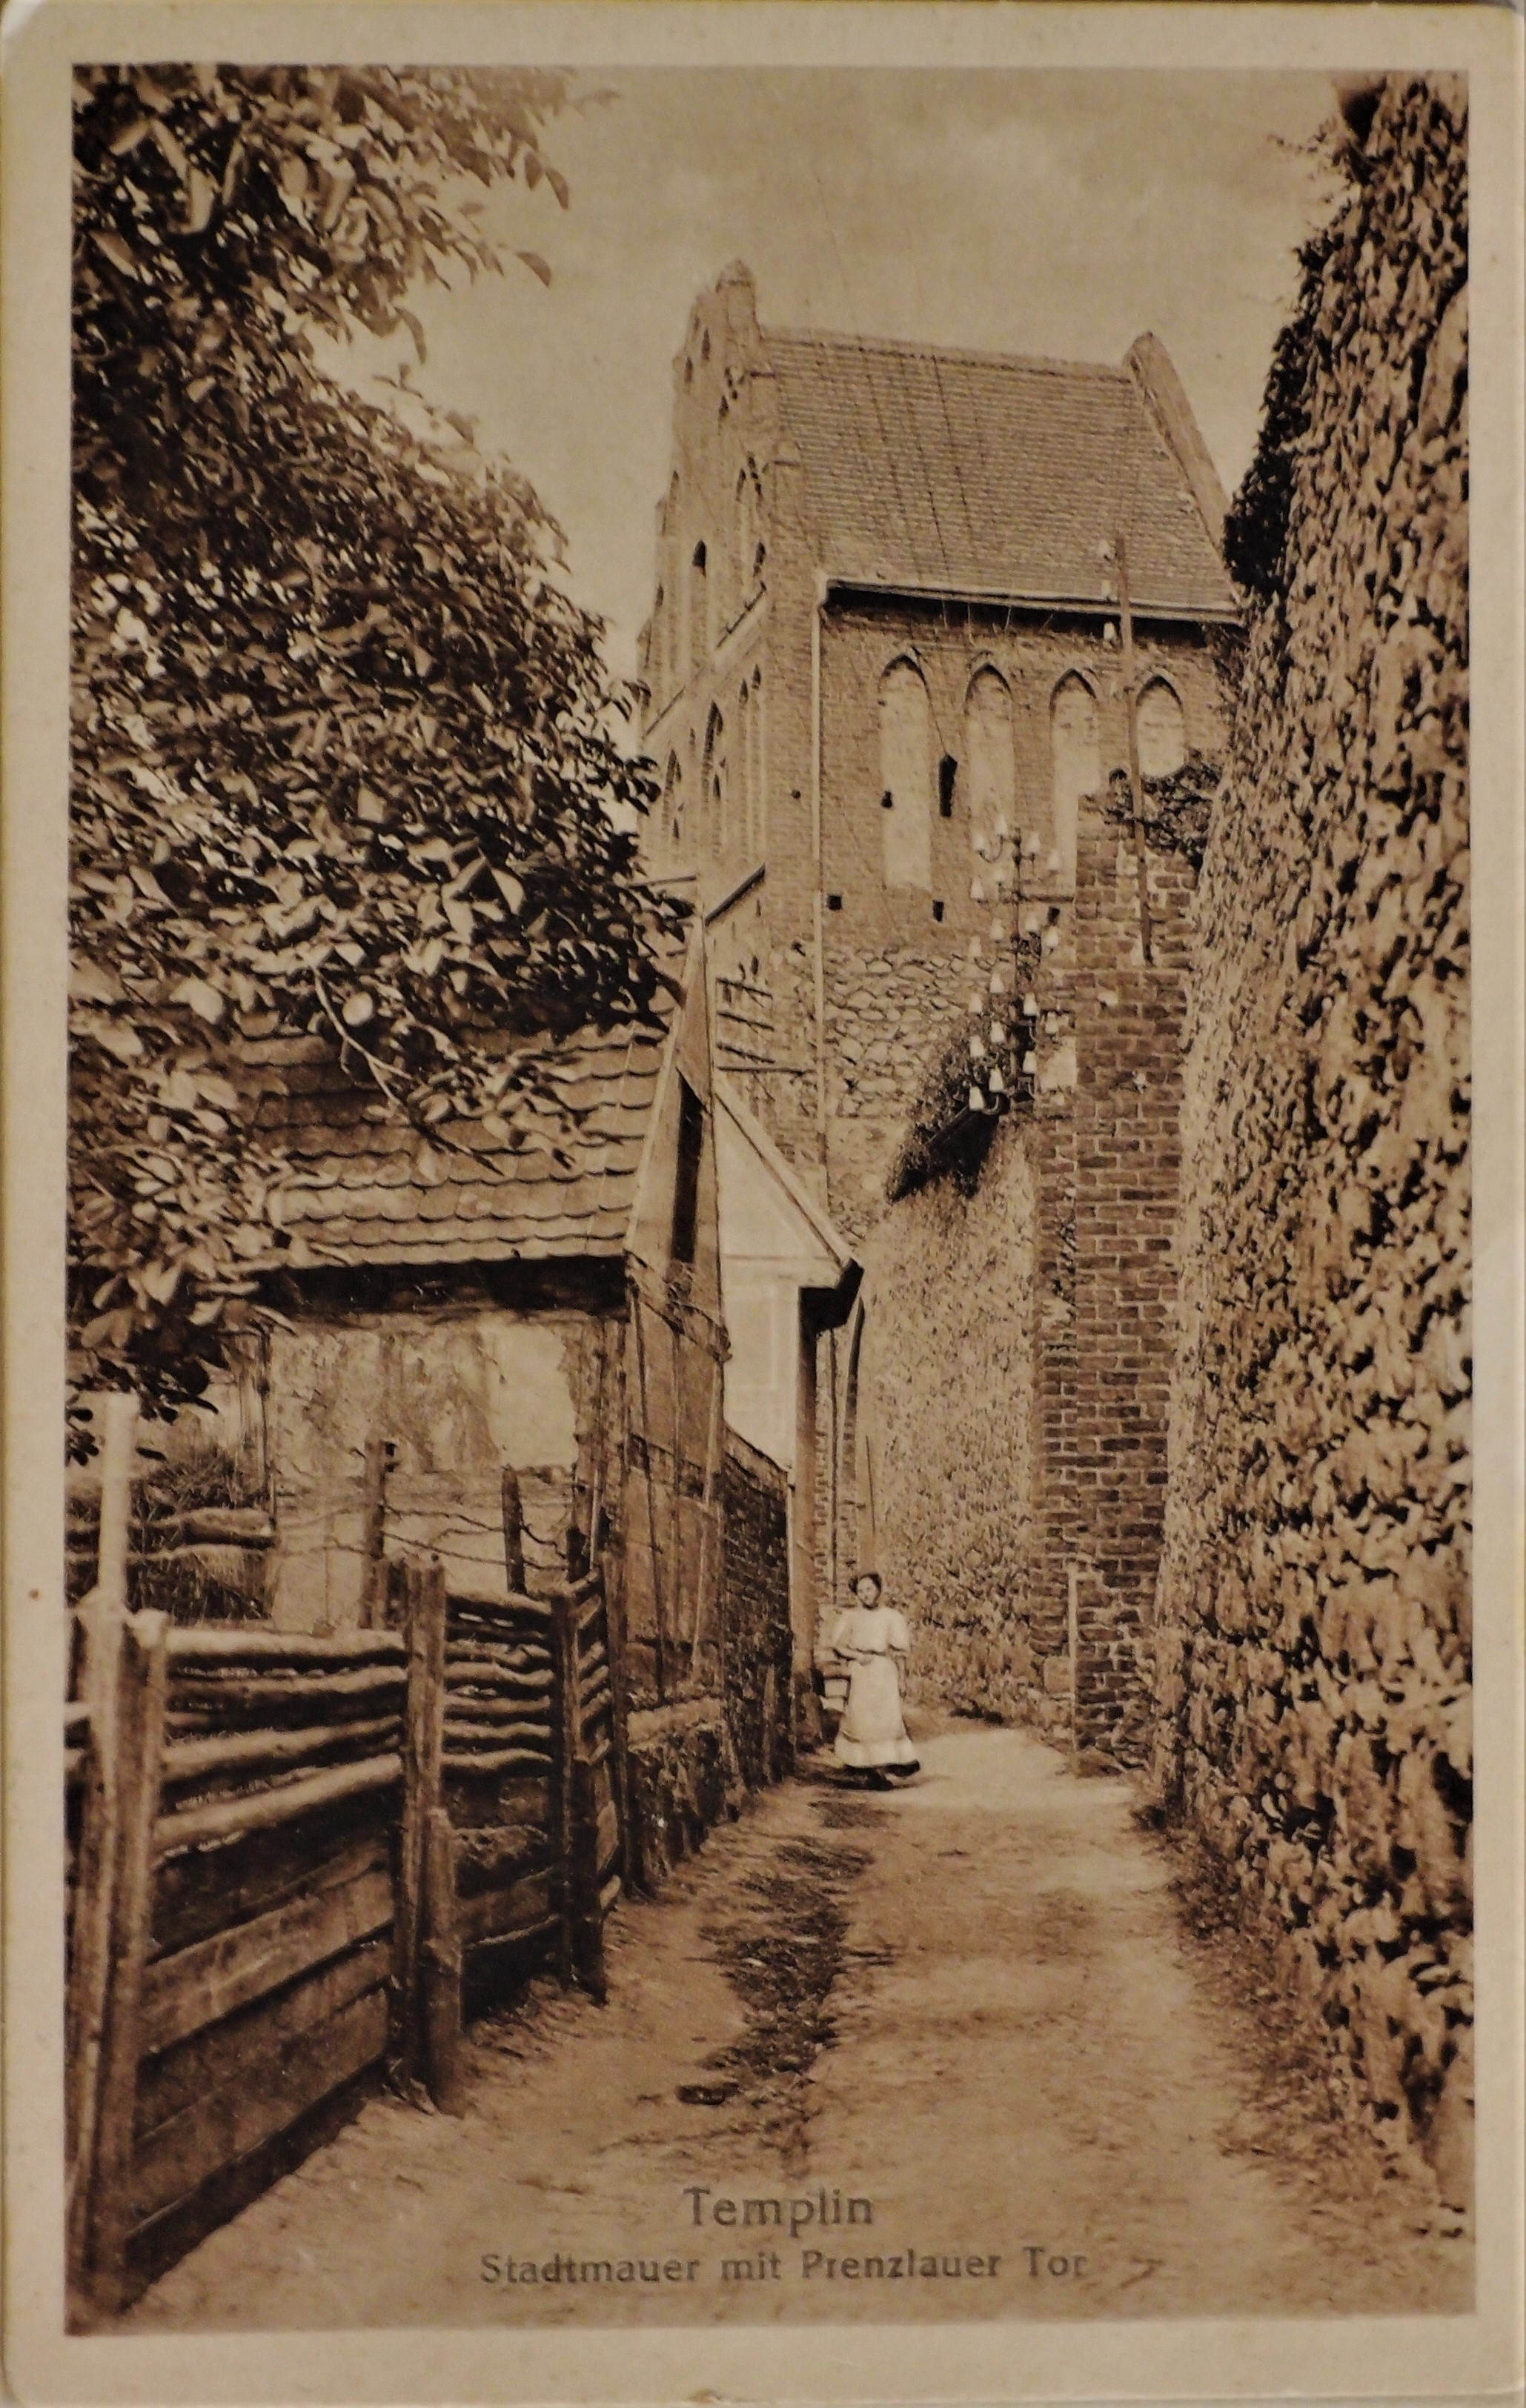 Ansichtskarte "Stadtmauer mit Prenzlauer Tor" in Templin (Museum für Stadtgeschichte Templin CC BY-NC-SA)